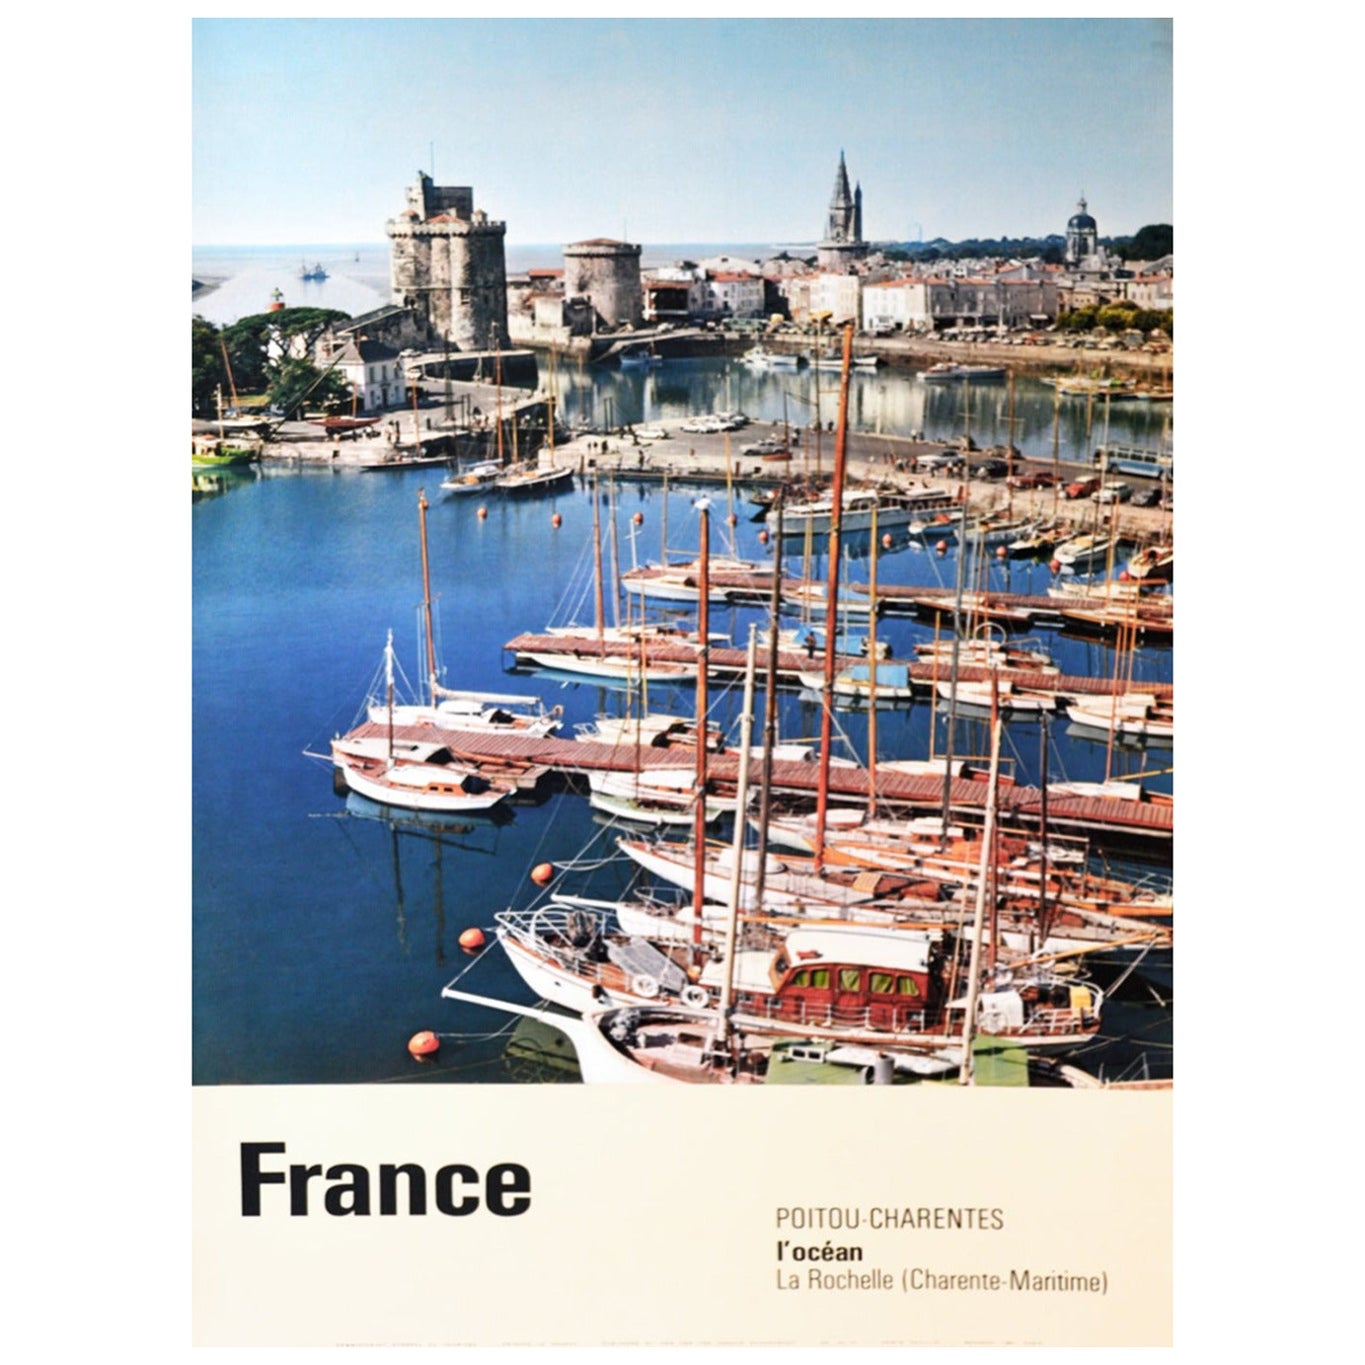 1963 France Poitou Charentes Original Vintage Poster